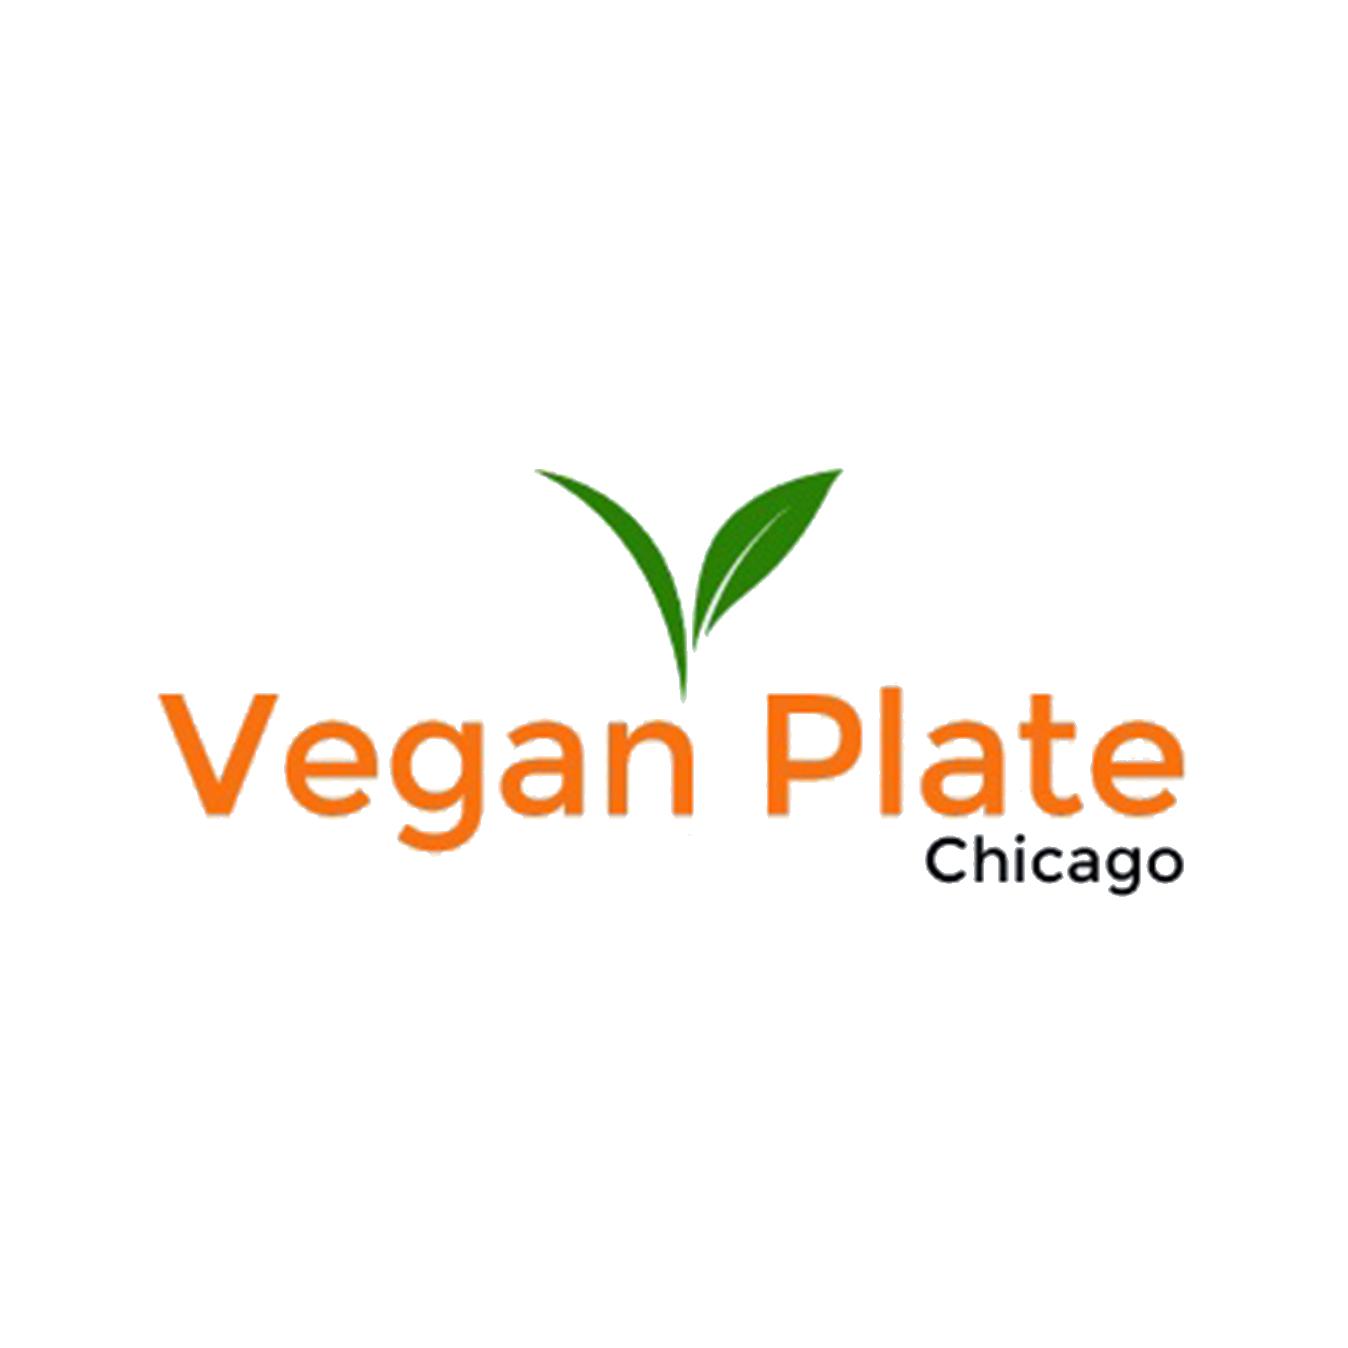 Vegan Plate Chicago